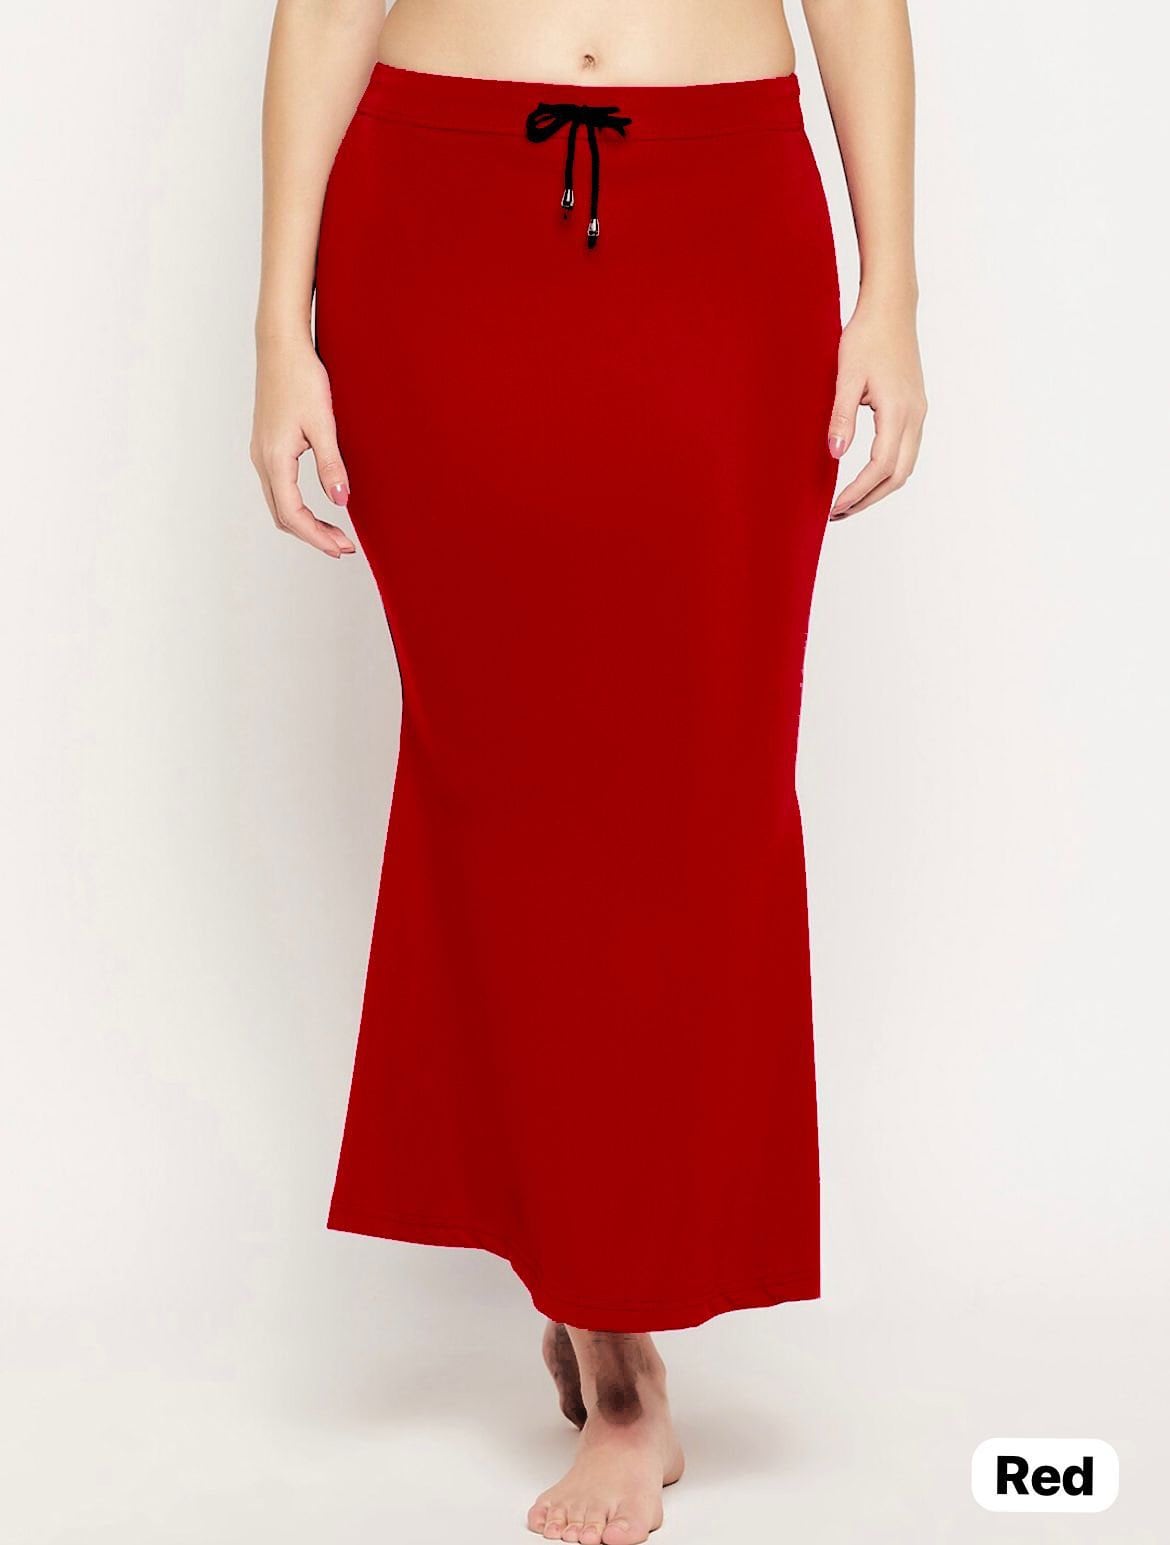 Trylo RIZA SAREE SHAPEWEAR-RED-2XL Lycra Blend Petticoat Price in